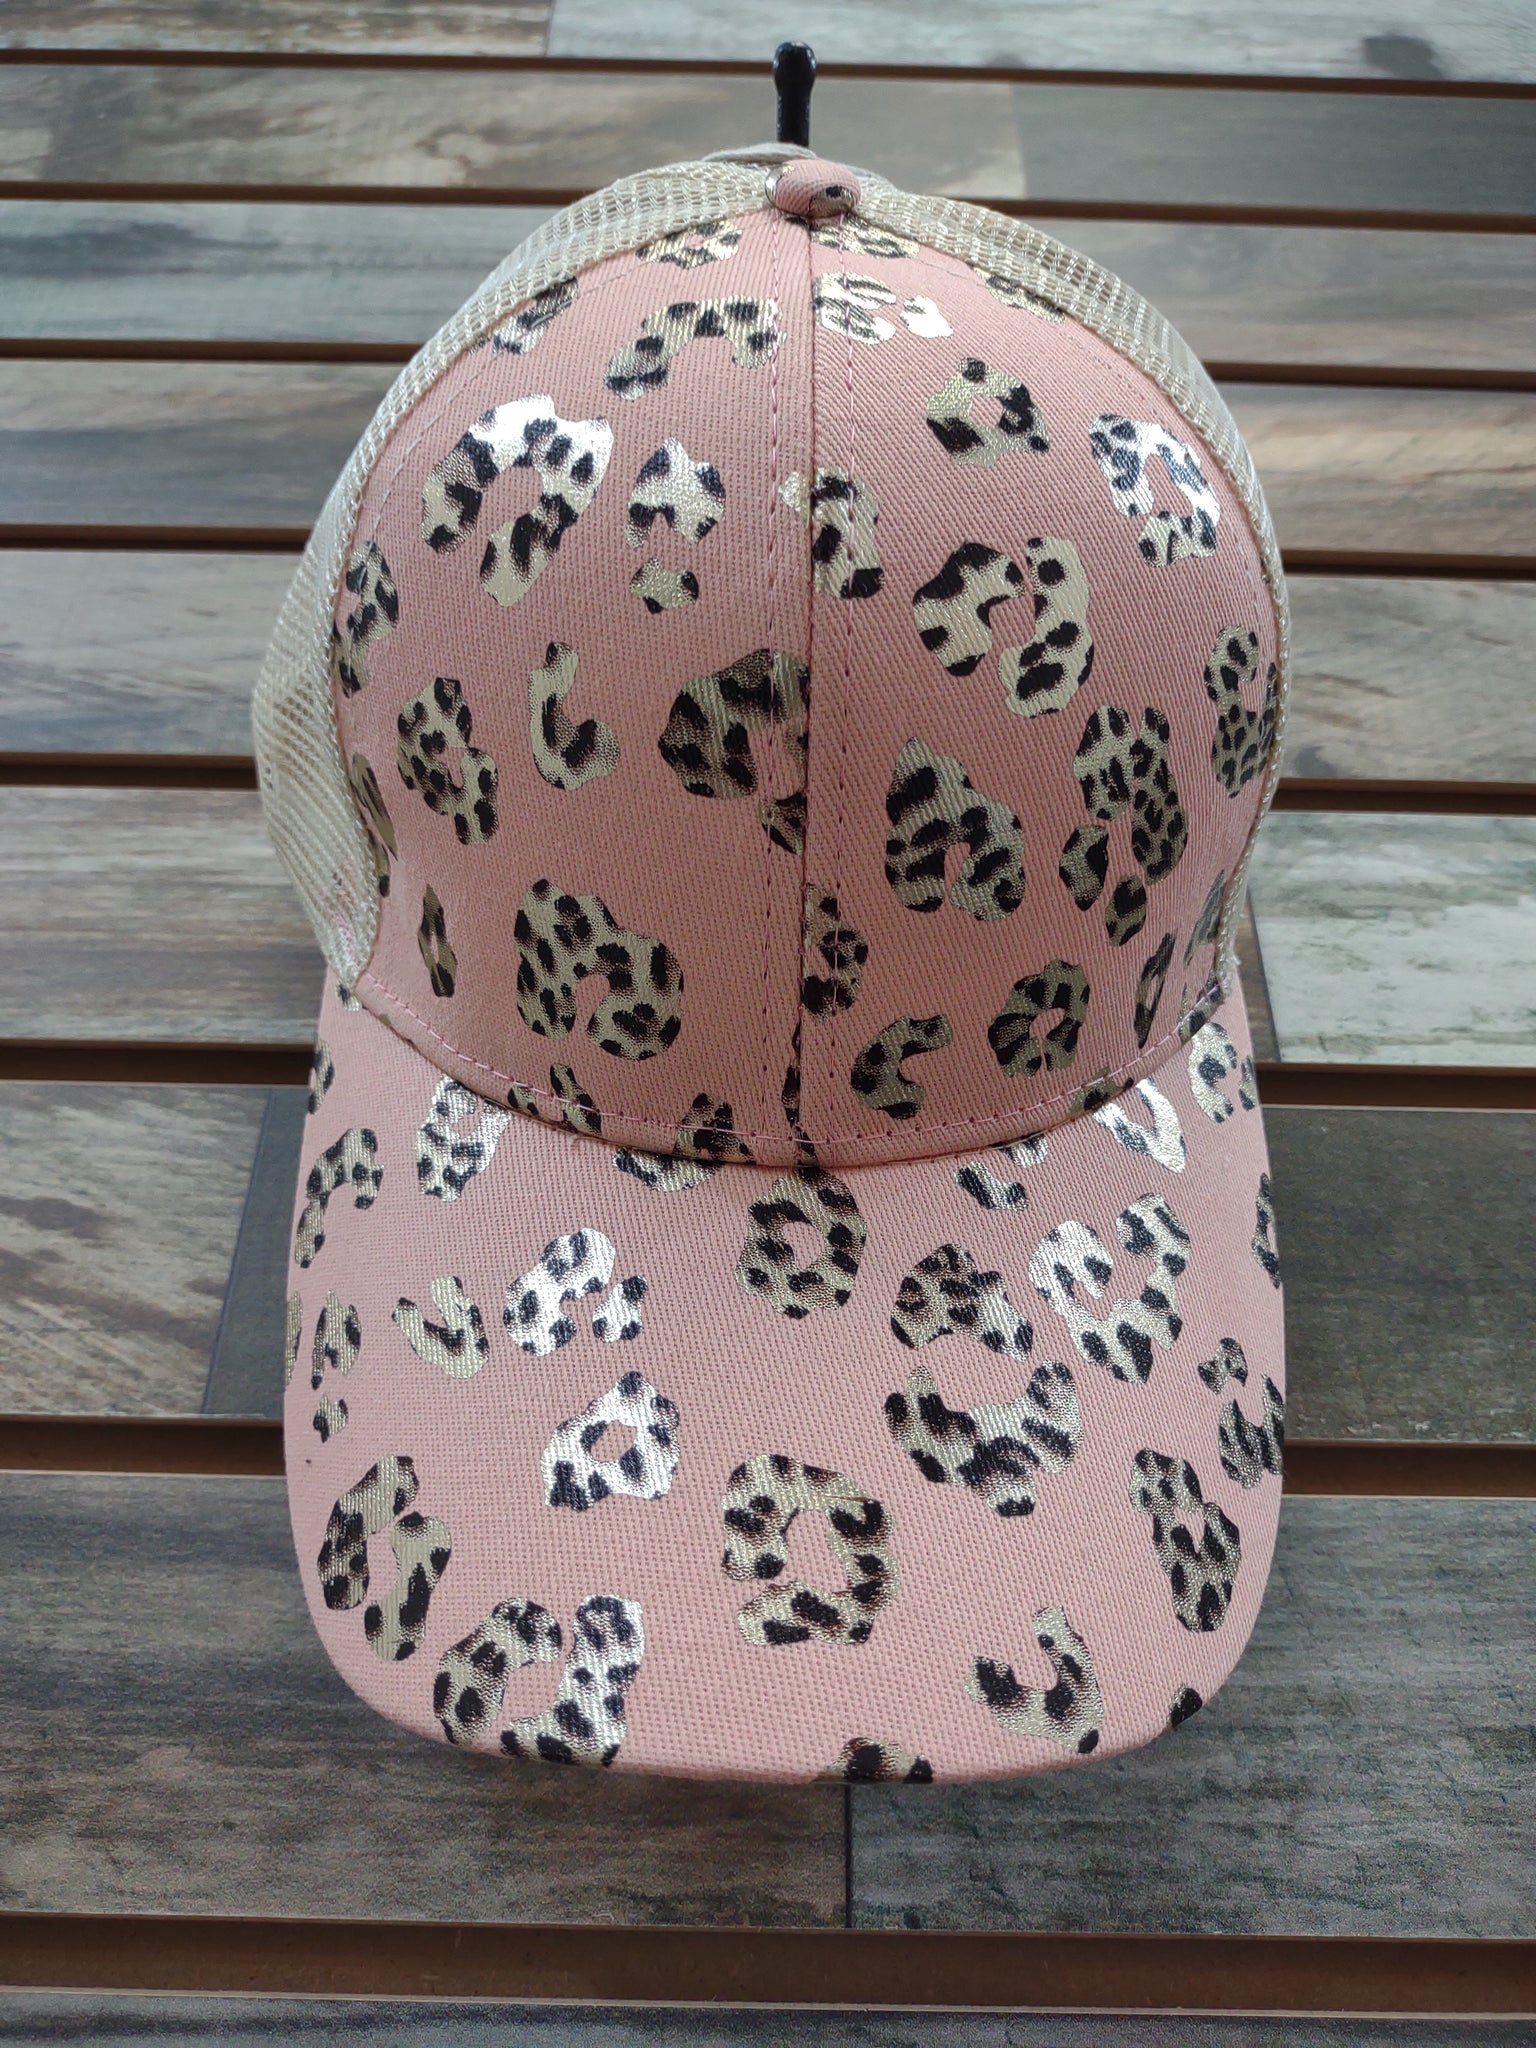 The Pink Leopard Cap